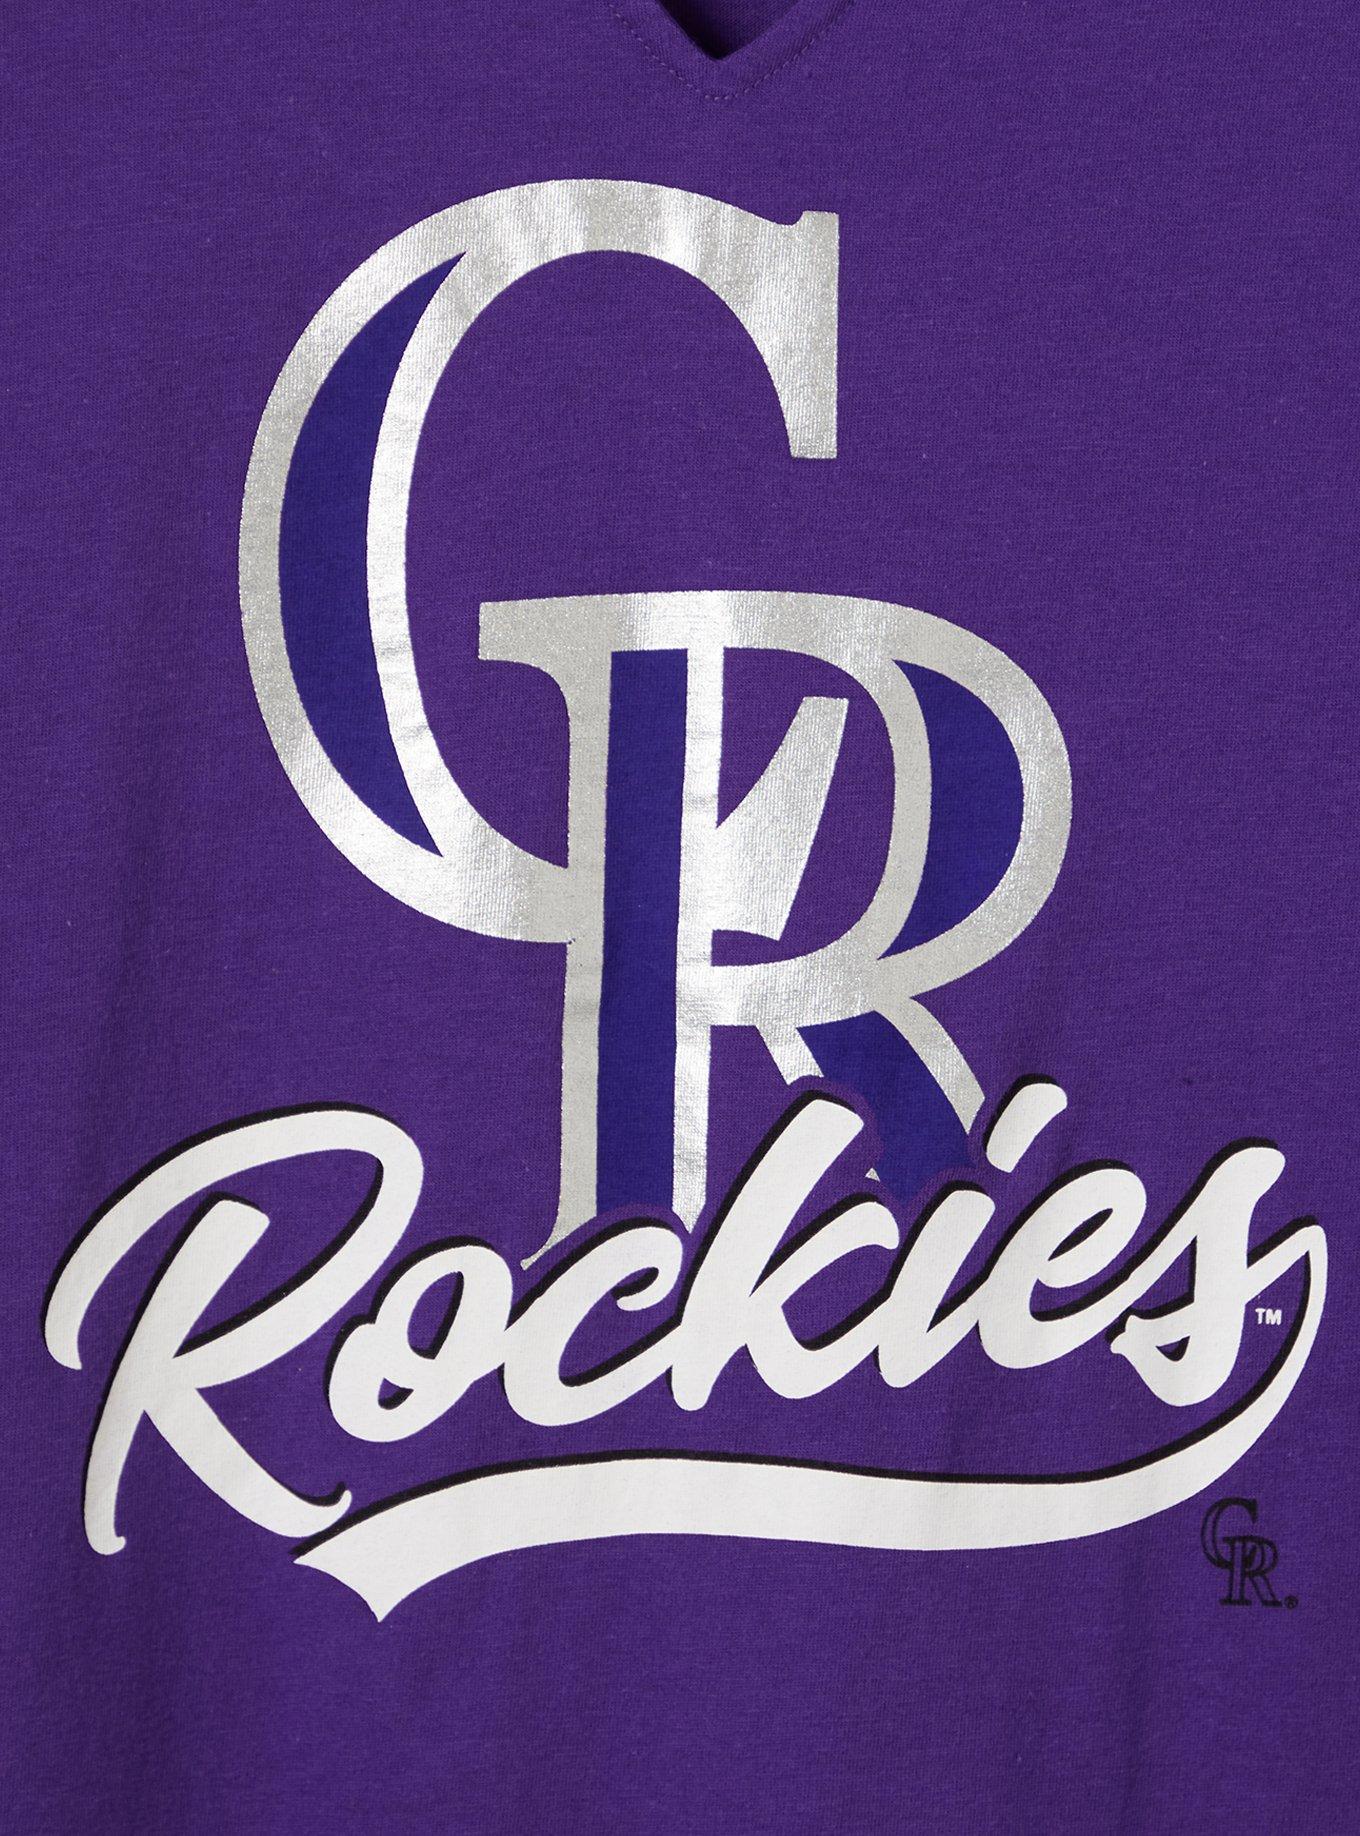 Colorado Rockies Purple MLB Jerseys for sale